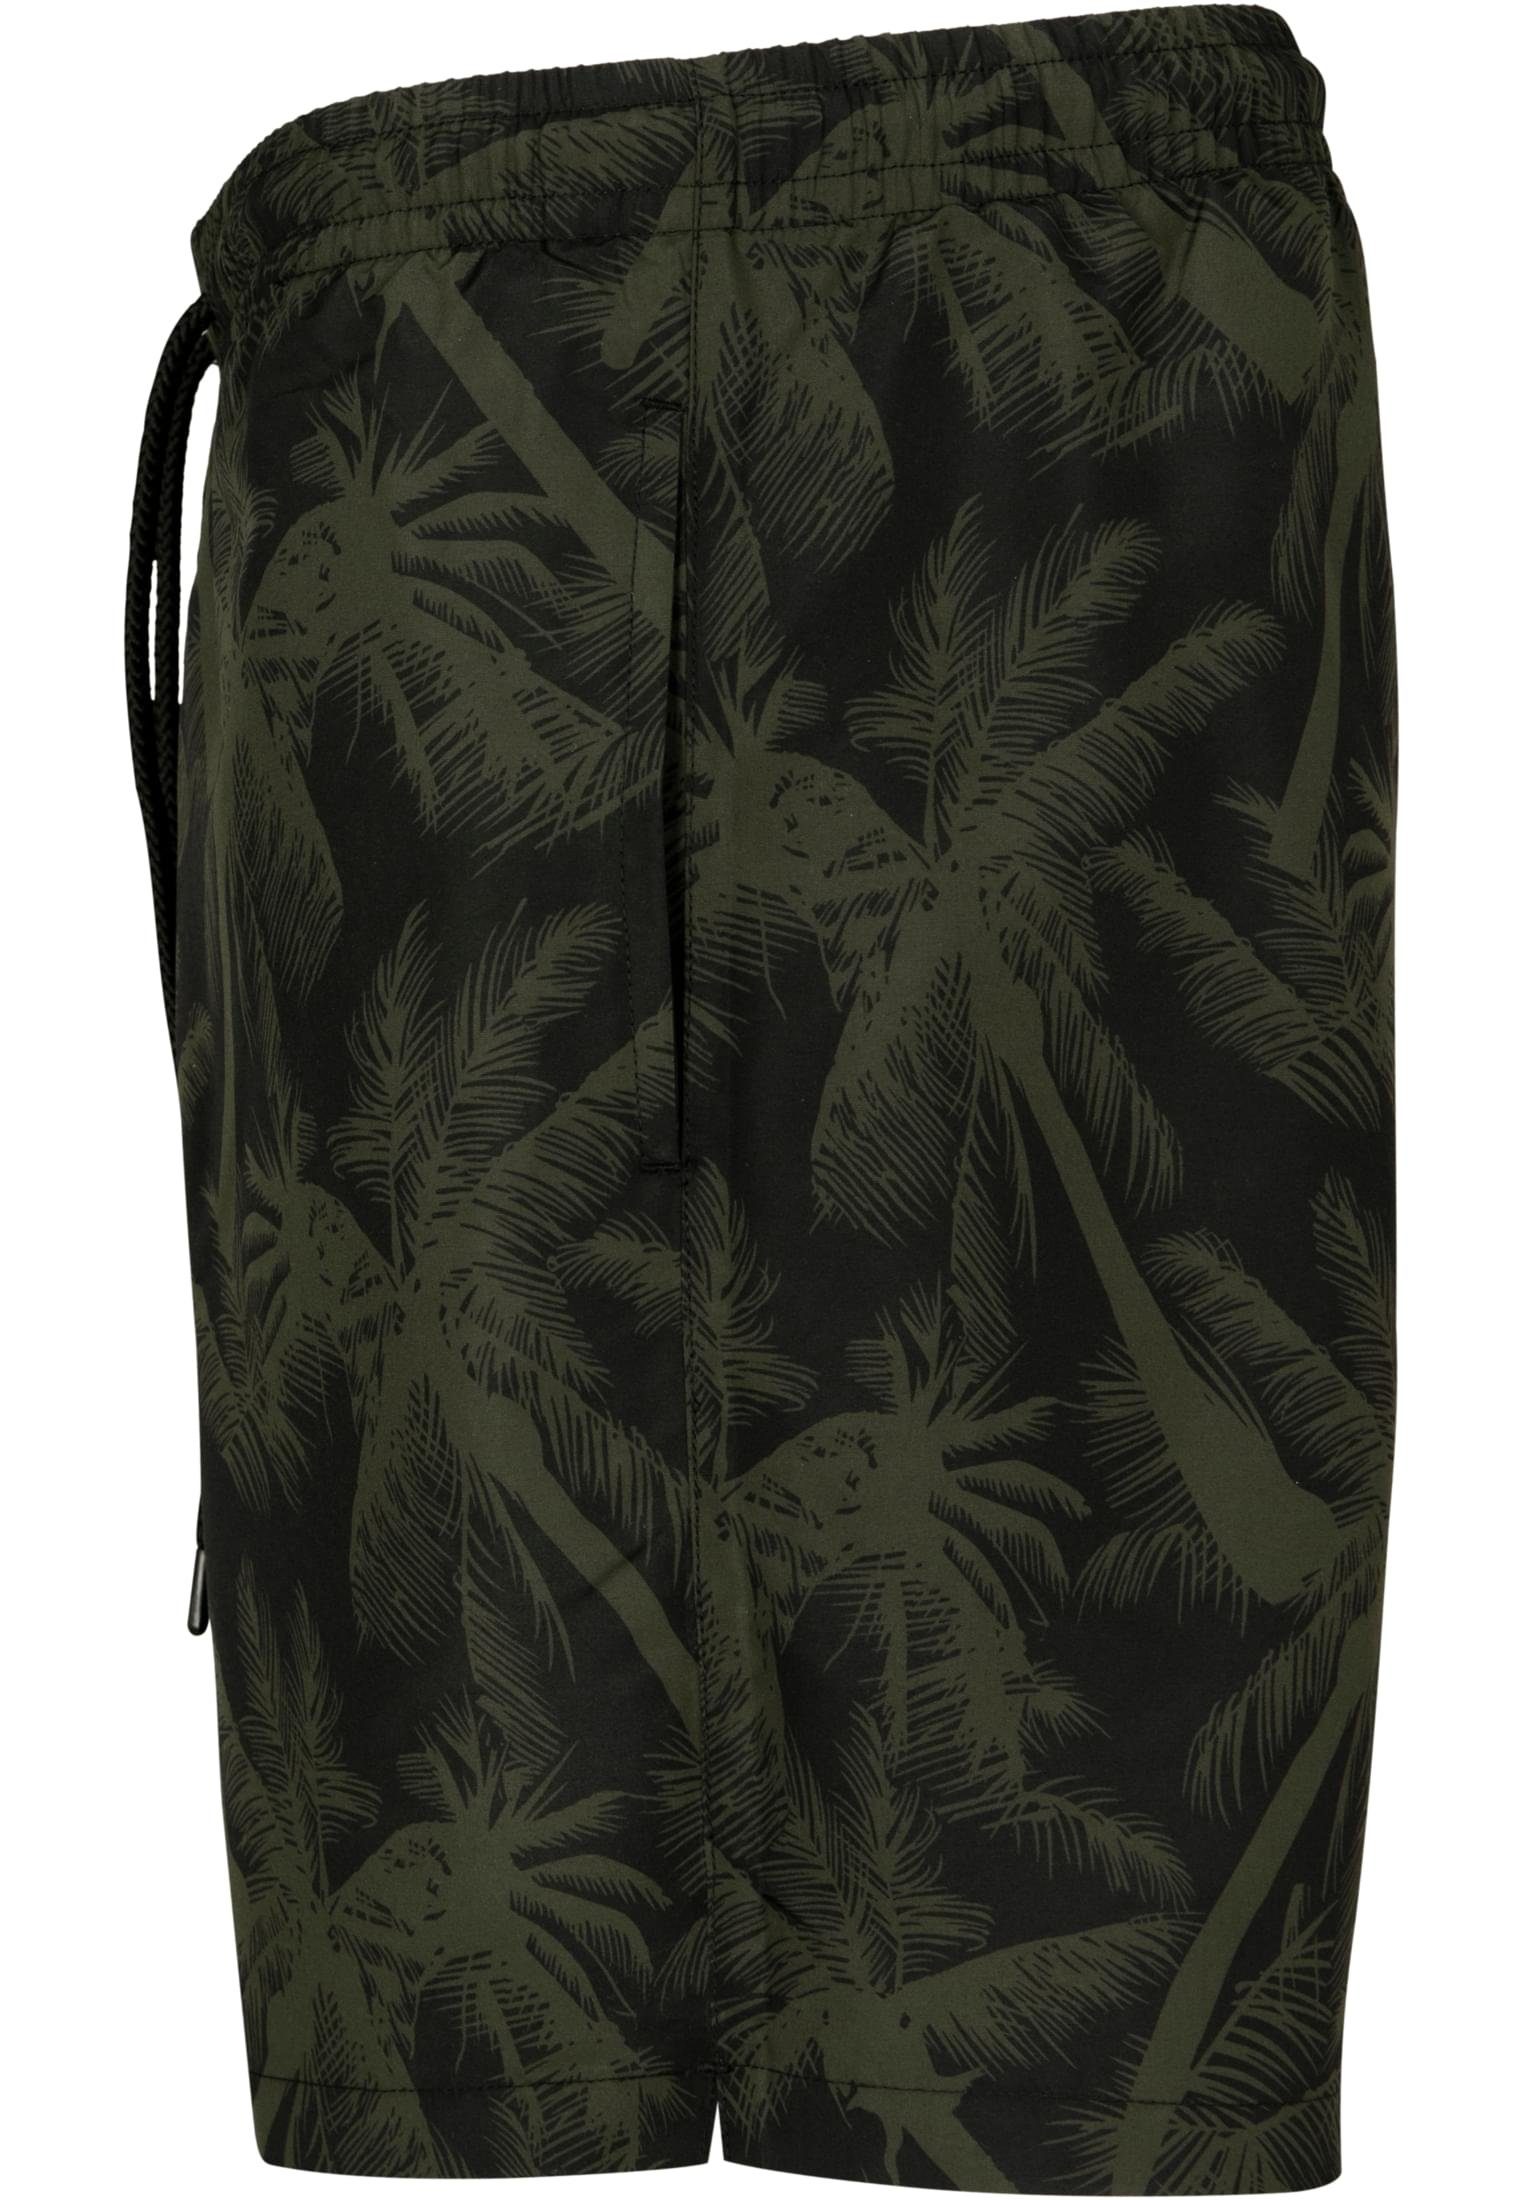 Shorts Herren Swim Pattern CLASSICS URBAN palm/olive Badeshorts